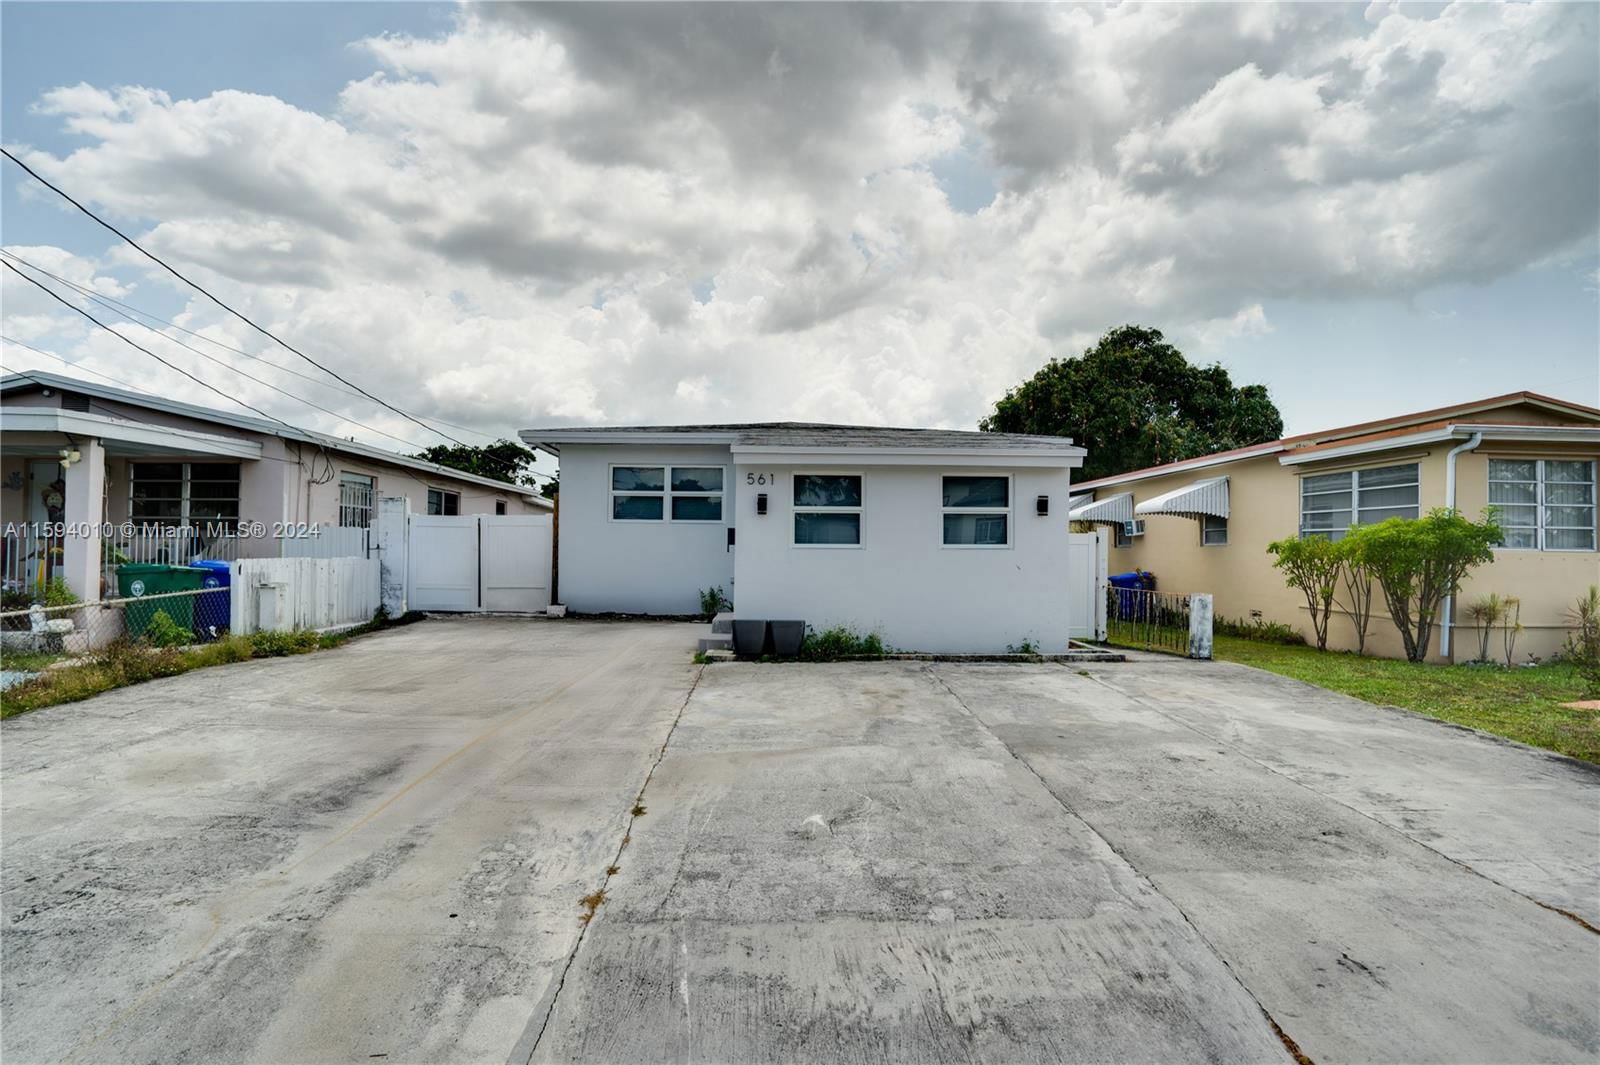 Real estate property located at 561 58th Ct, Miami-Dade County, W FLAGLER PK, Miami, FL